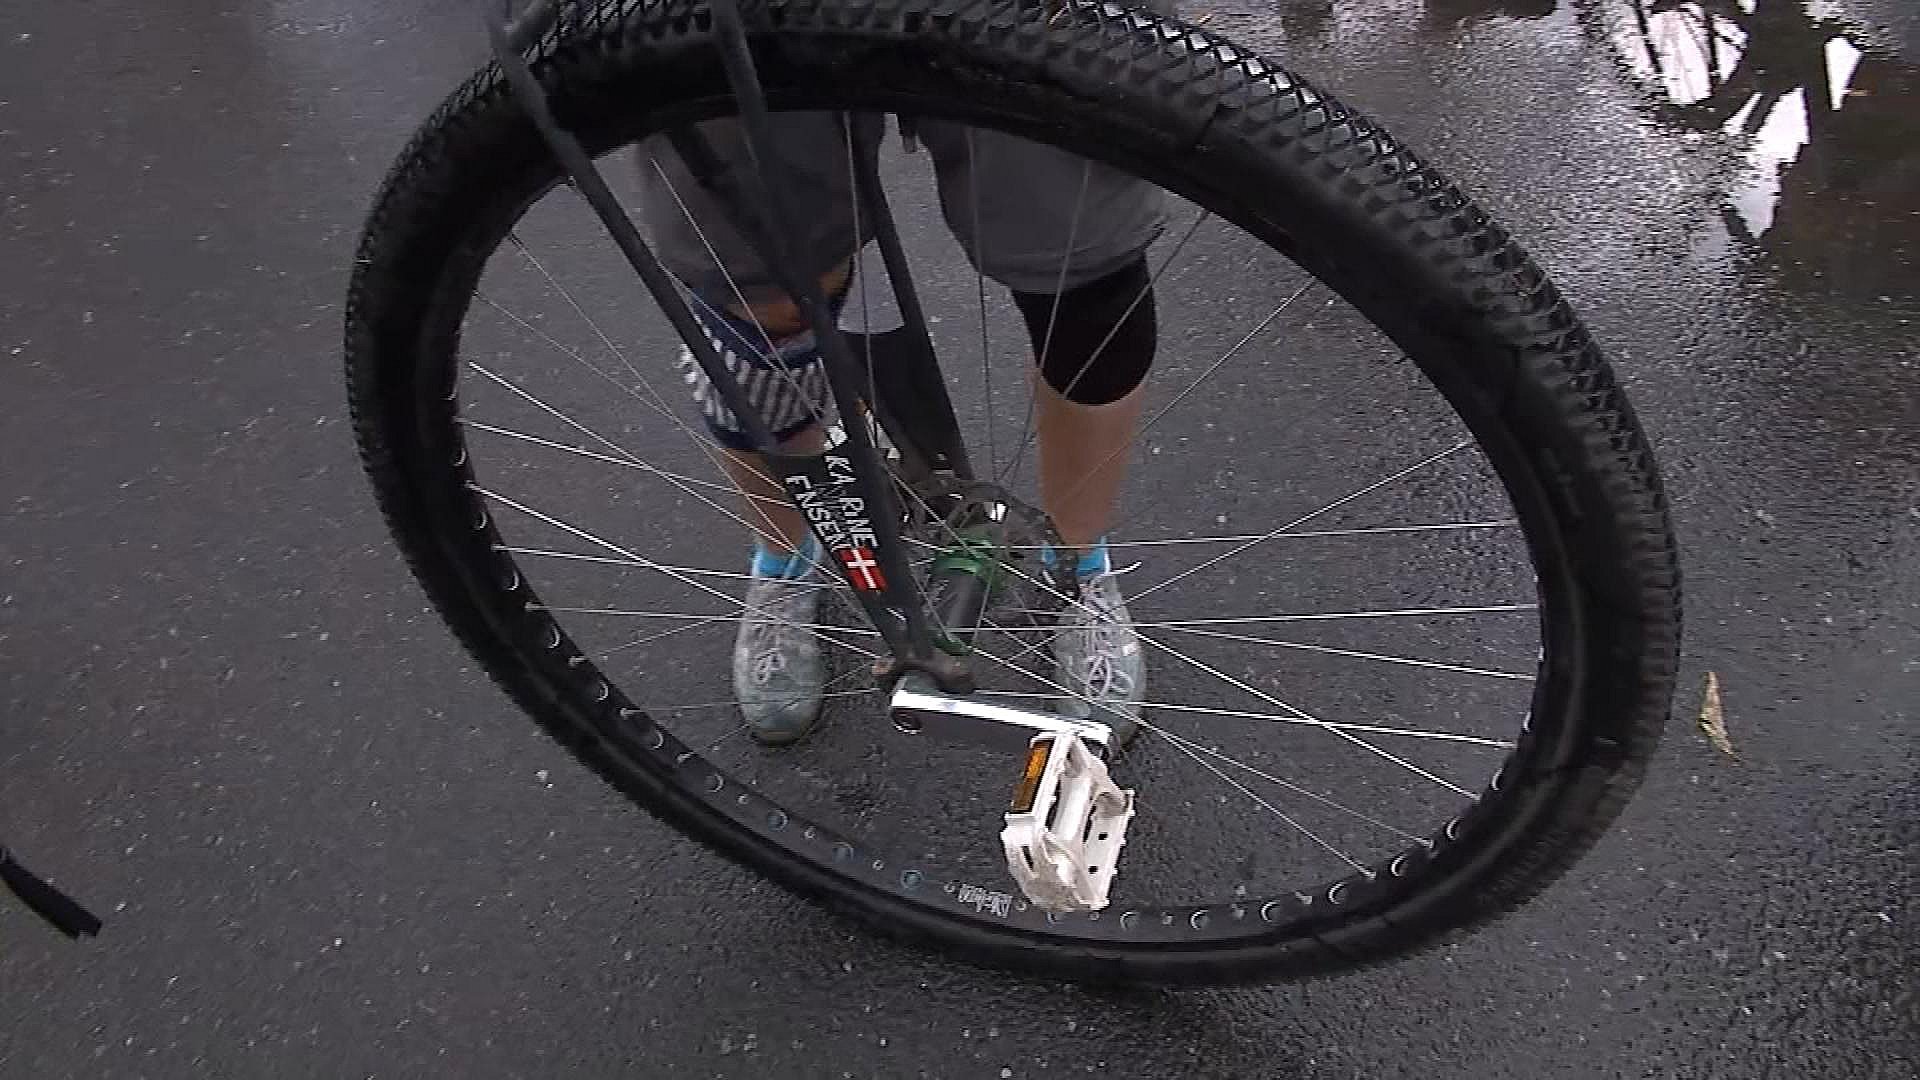 Støvet hane svale Amanda cykler 52 kilometer på ethjulet cykel | TV2 ØST